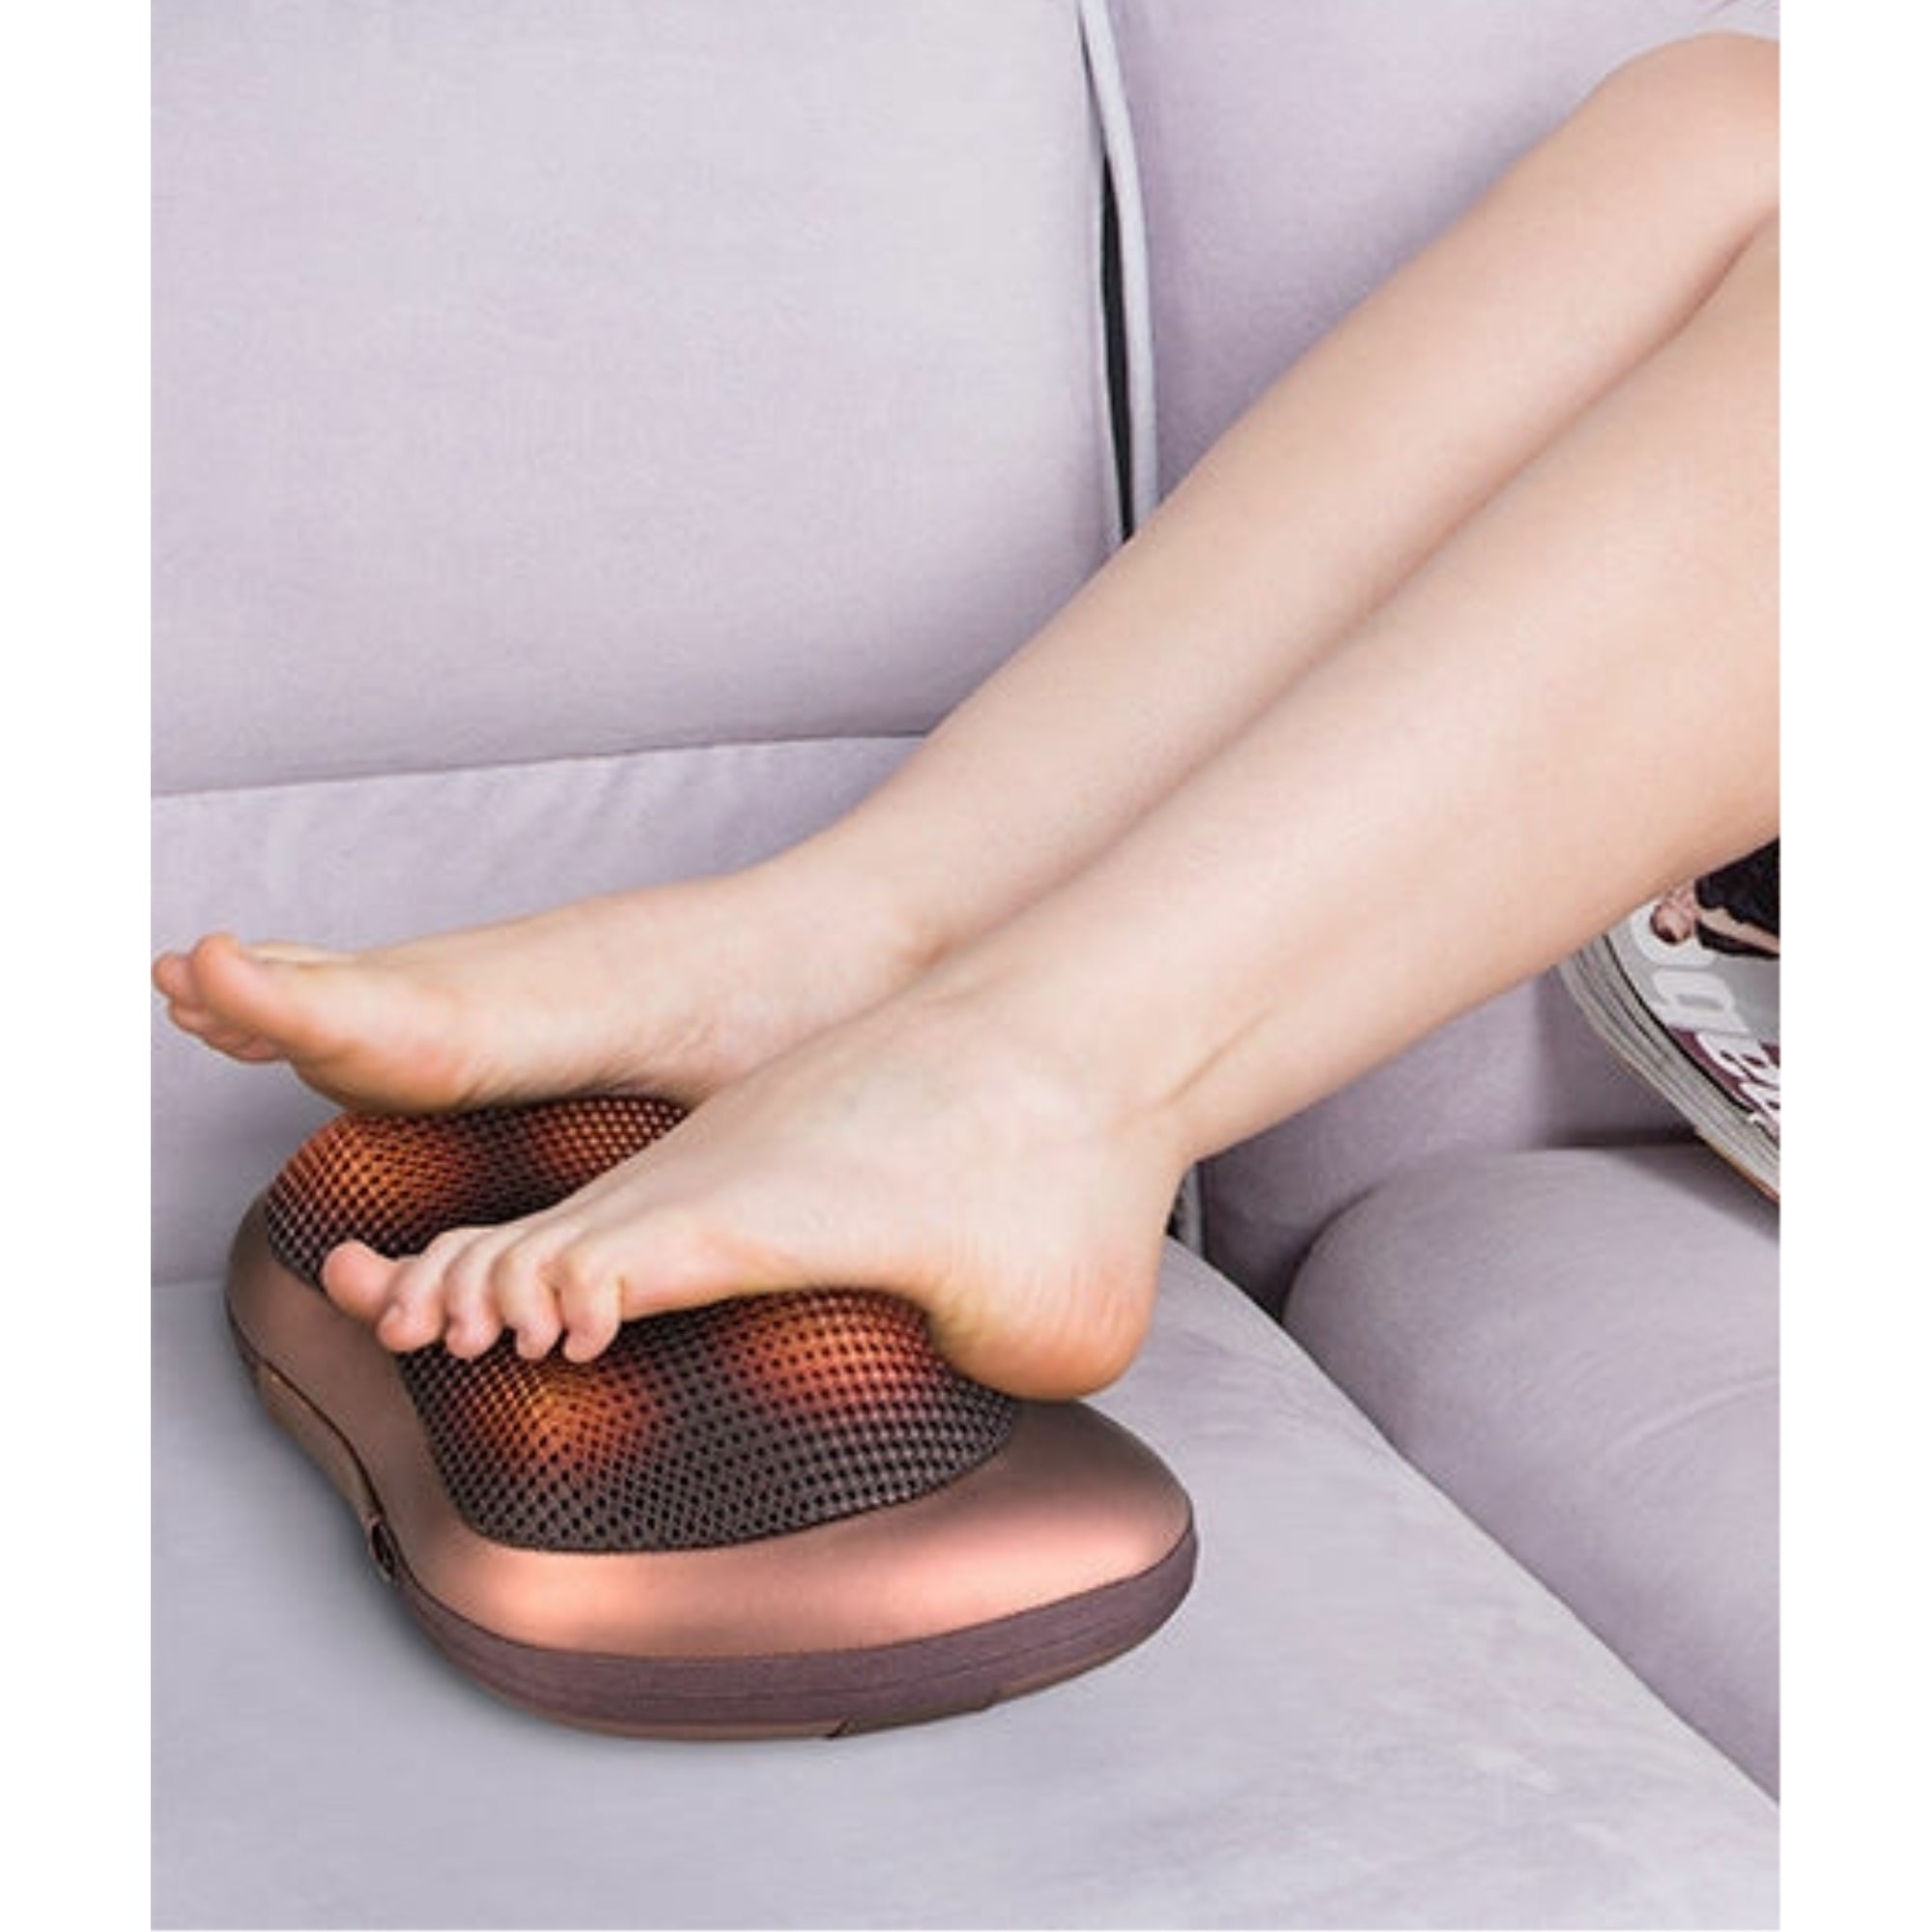 ZfLogic SHIATSU Pillow Massager W/ Heat w/ Car& Home Adapter